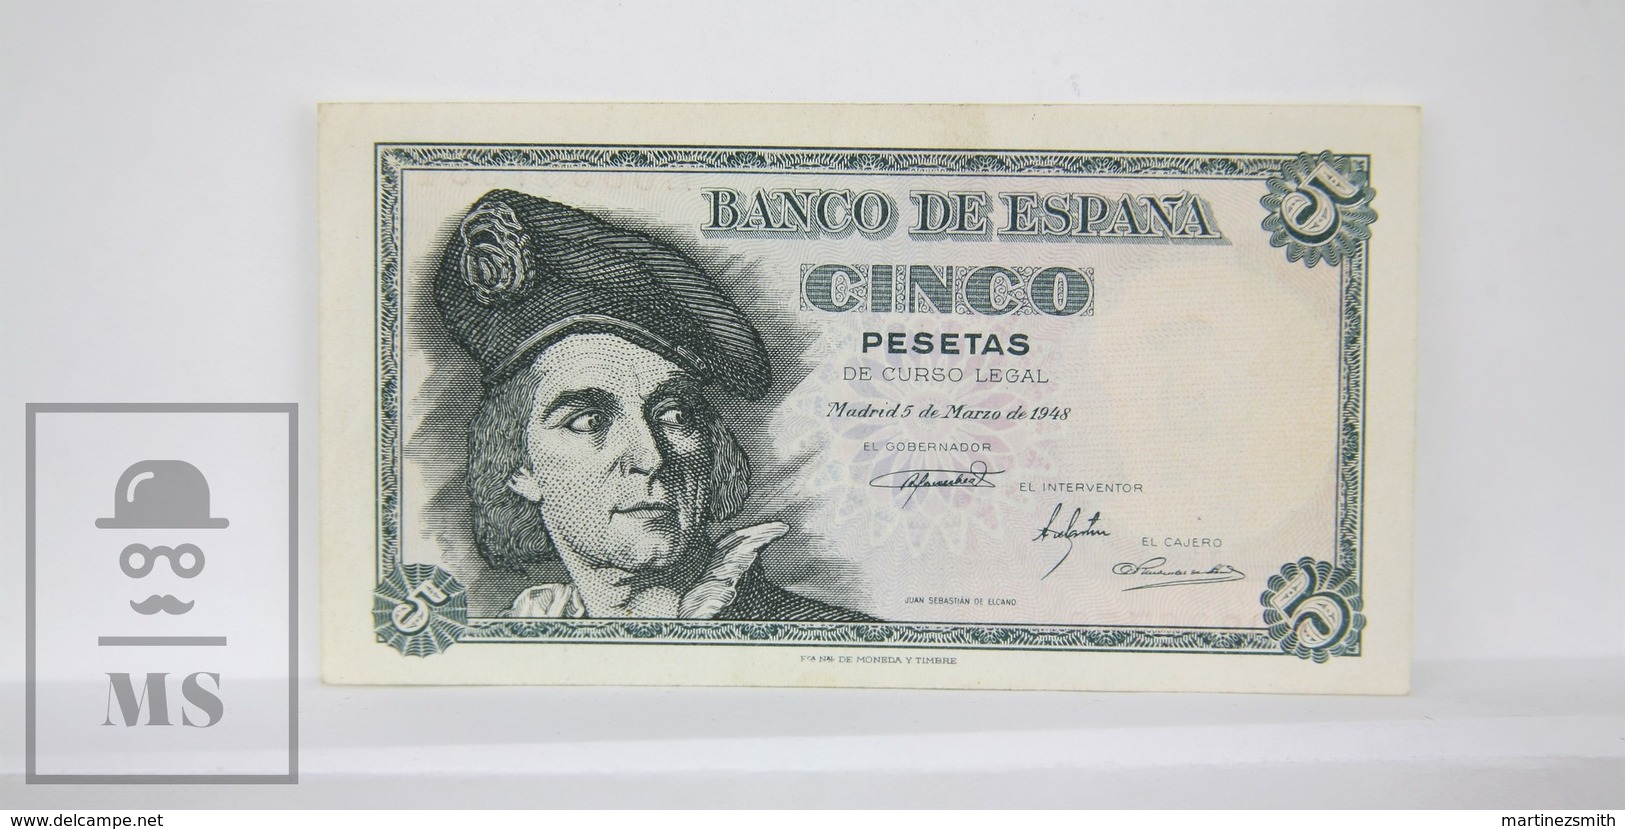 Spain/ España 5 Pesetas/ Ptas Spanish Banknote, Francisco Franco - Issued 1948, E Series - AU Quality - 5 Peseten